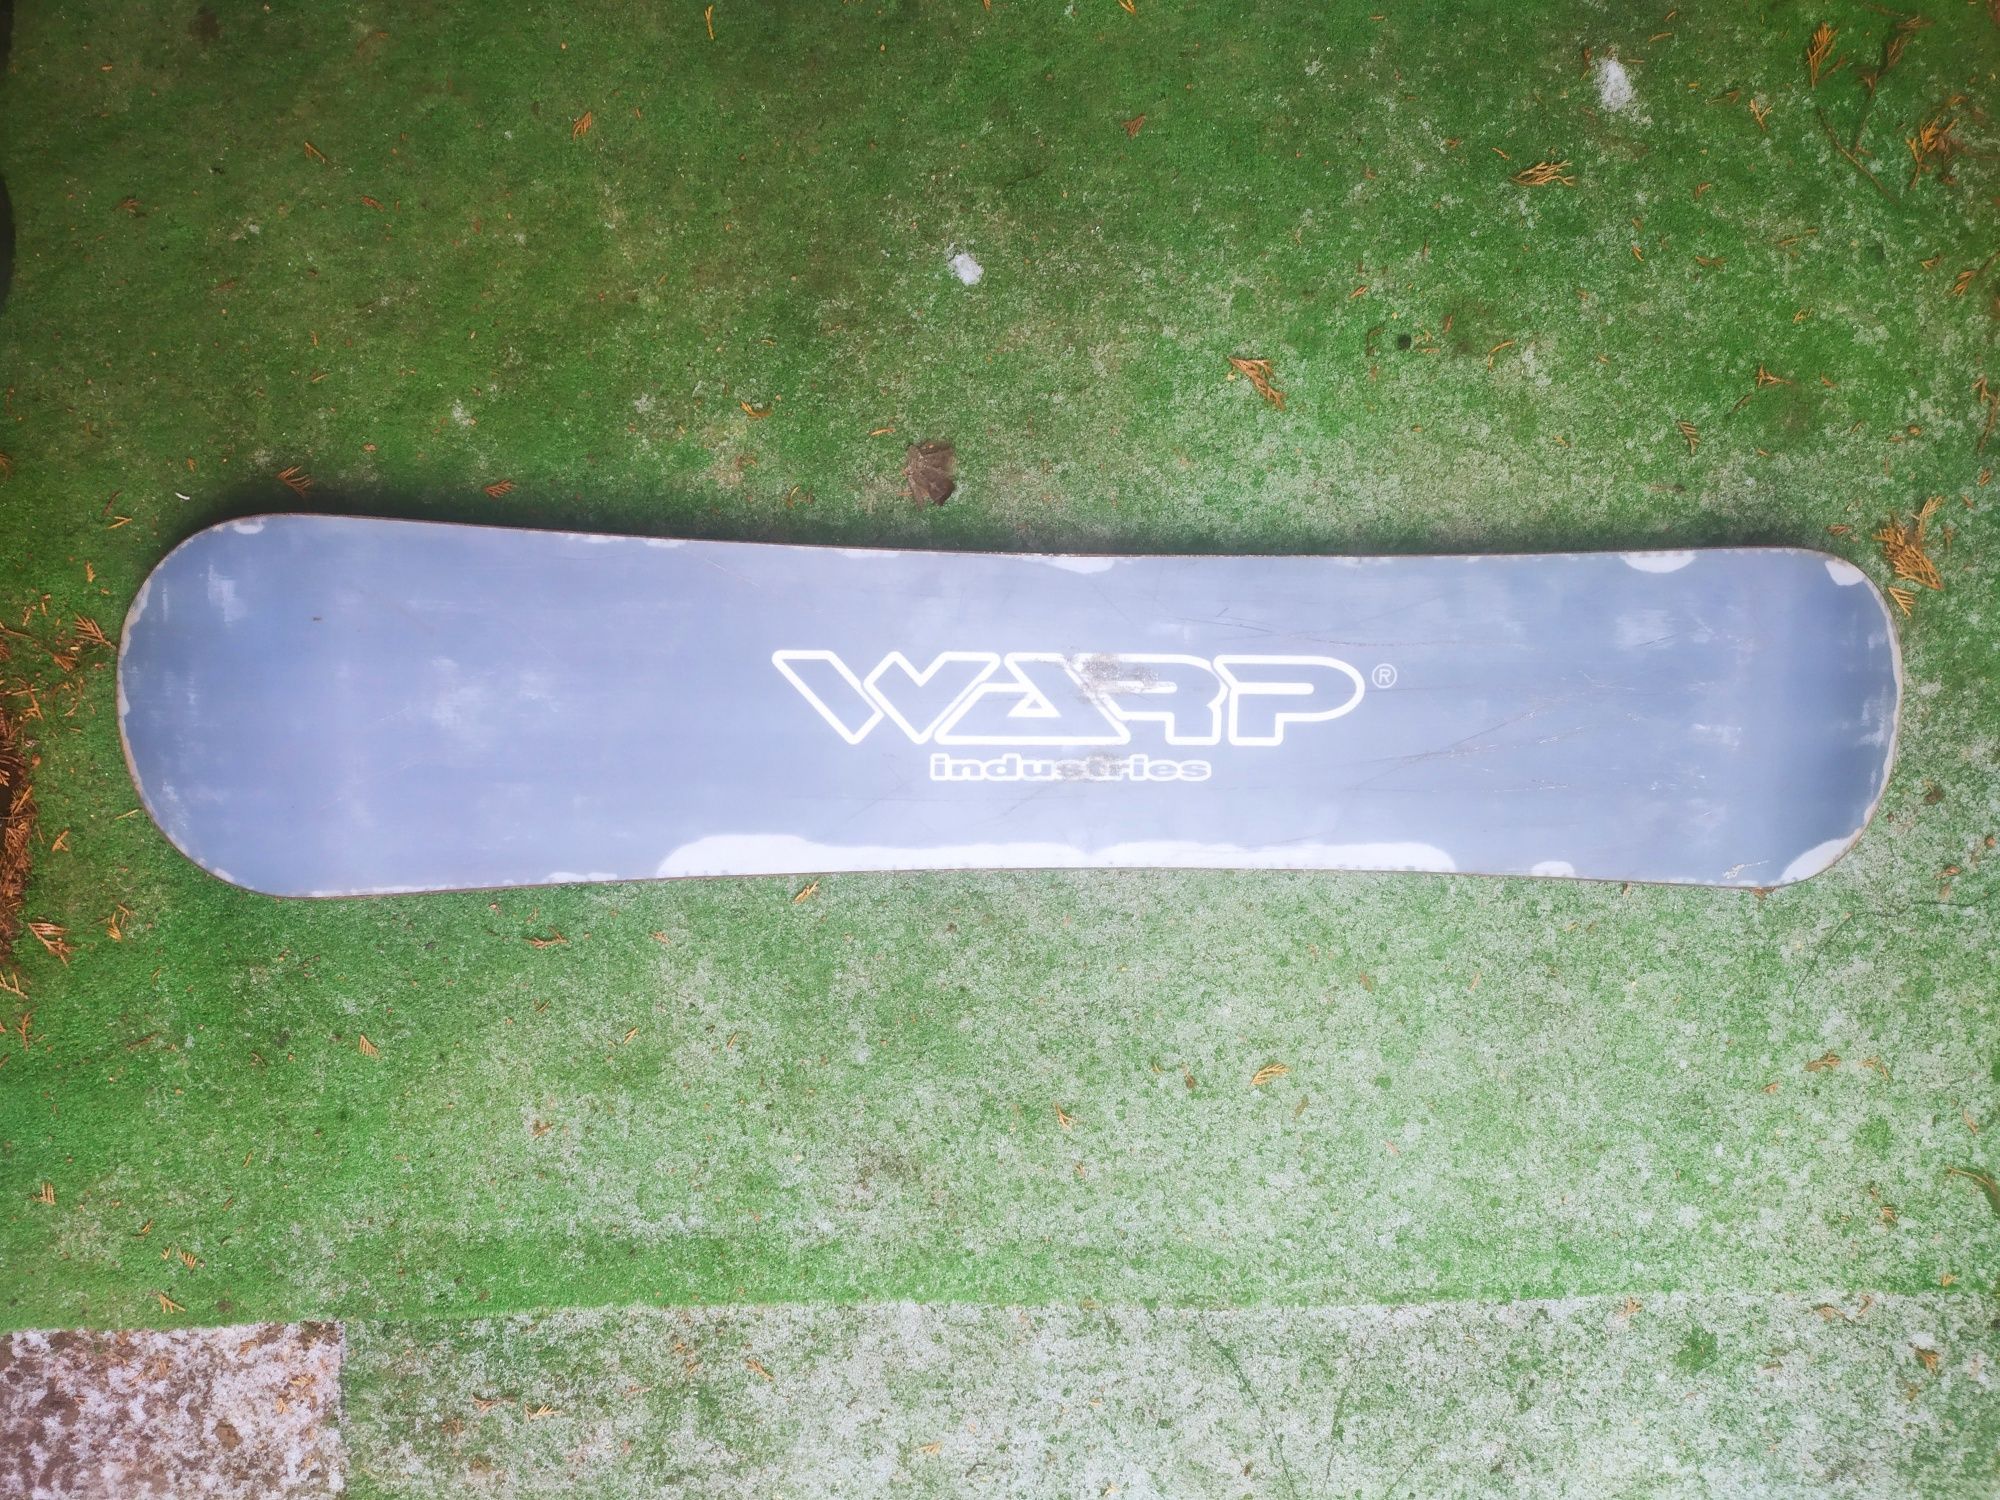 Deska snowboardowa 140cm warp industries. Tsg